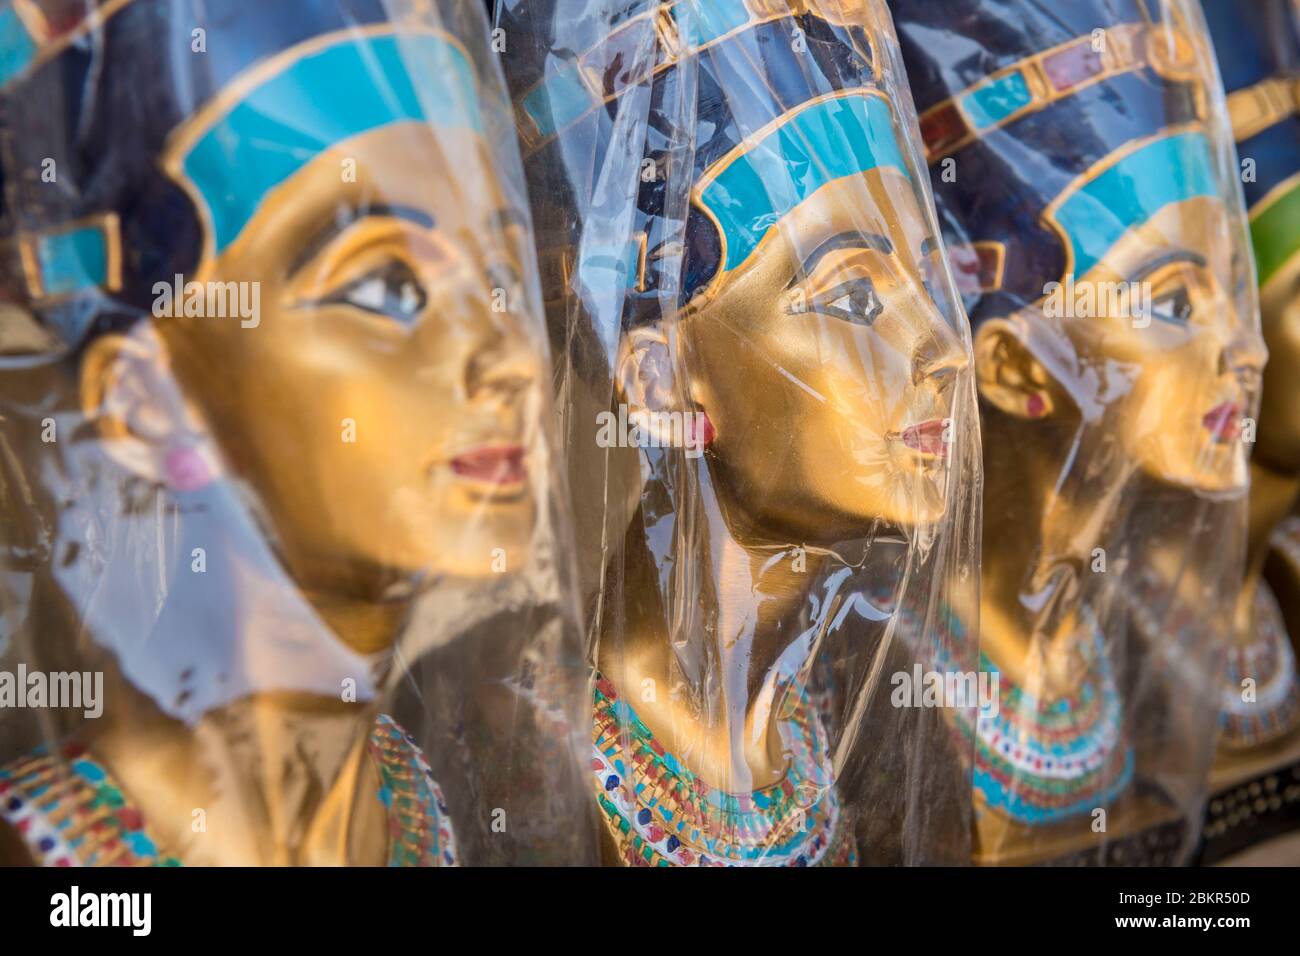 Egypt, Cairo, Giza, tourist market on site of the pyramids of Giza, souvenirs, plaster representing pyramids Stock Photo